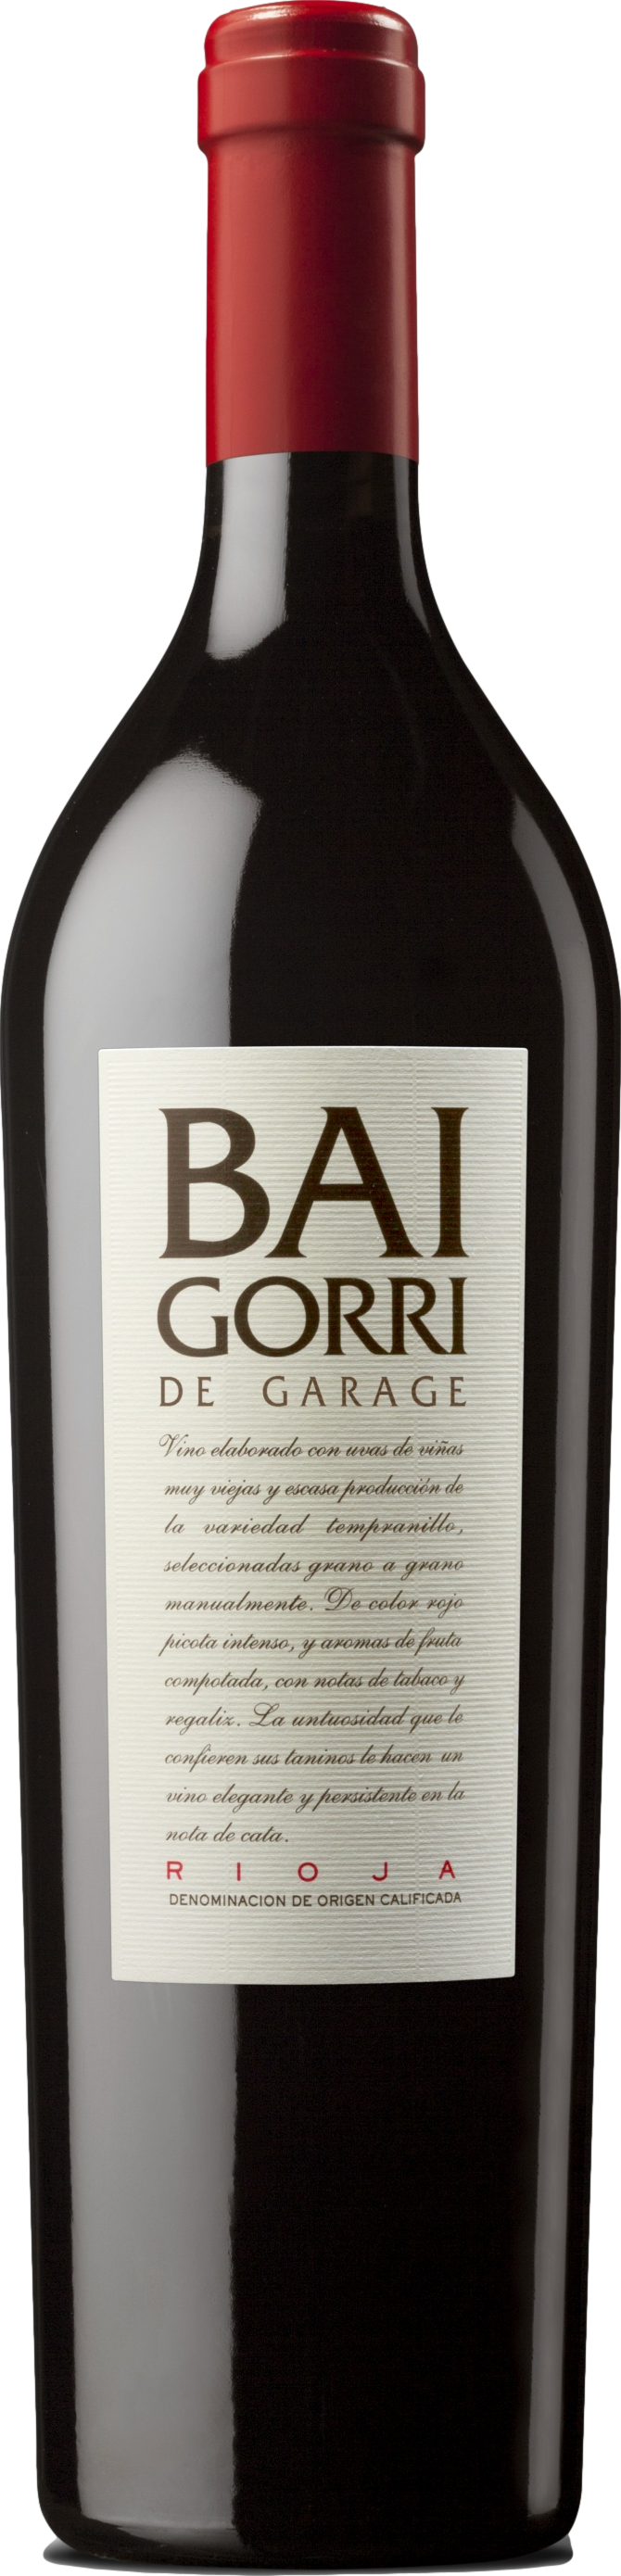 Baigorri De Garage Rioja 2018 Baigorri 8wines DACH